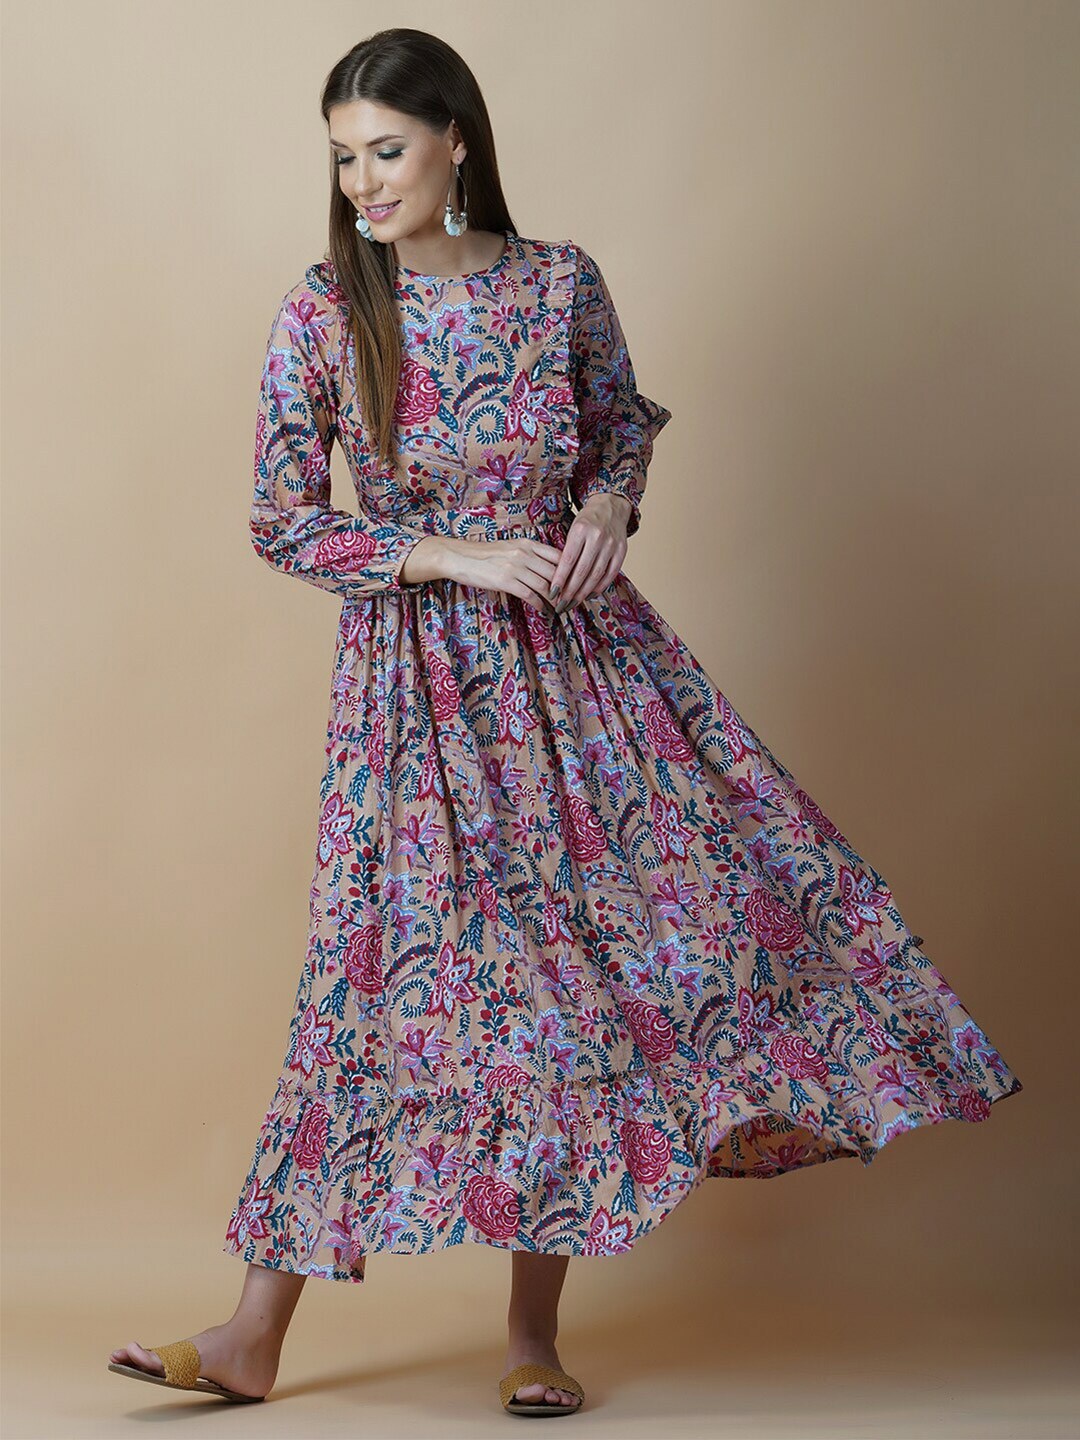 Twilldor Brown Floral Ethnic Cotton Maxi Dress Price in India